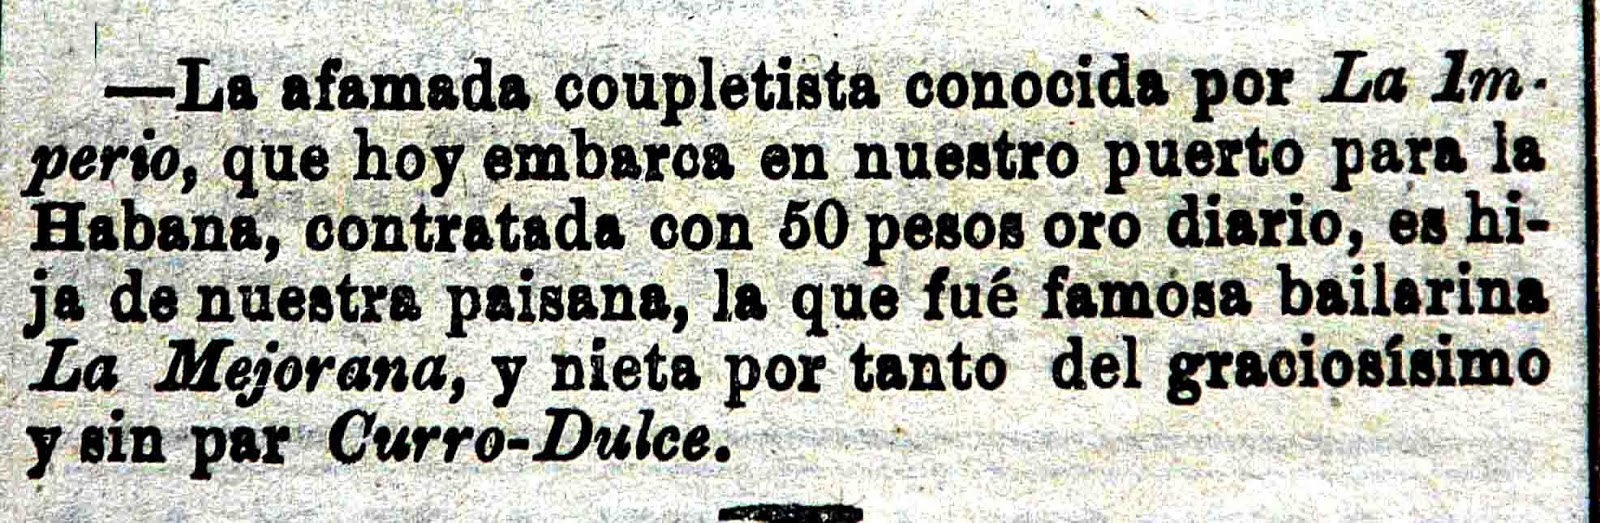 [Imagen: DIARIO+DE+CADIZ,+30.04.+1908.jpg]